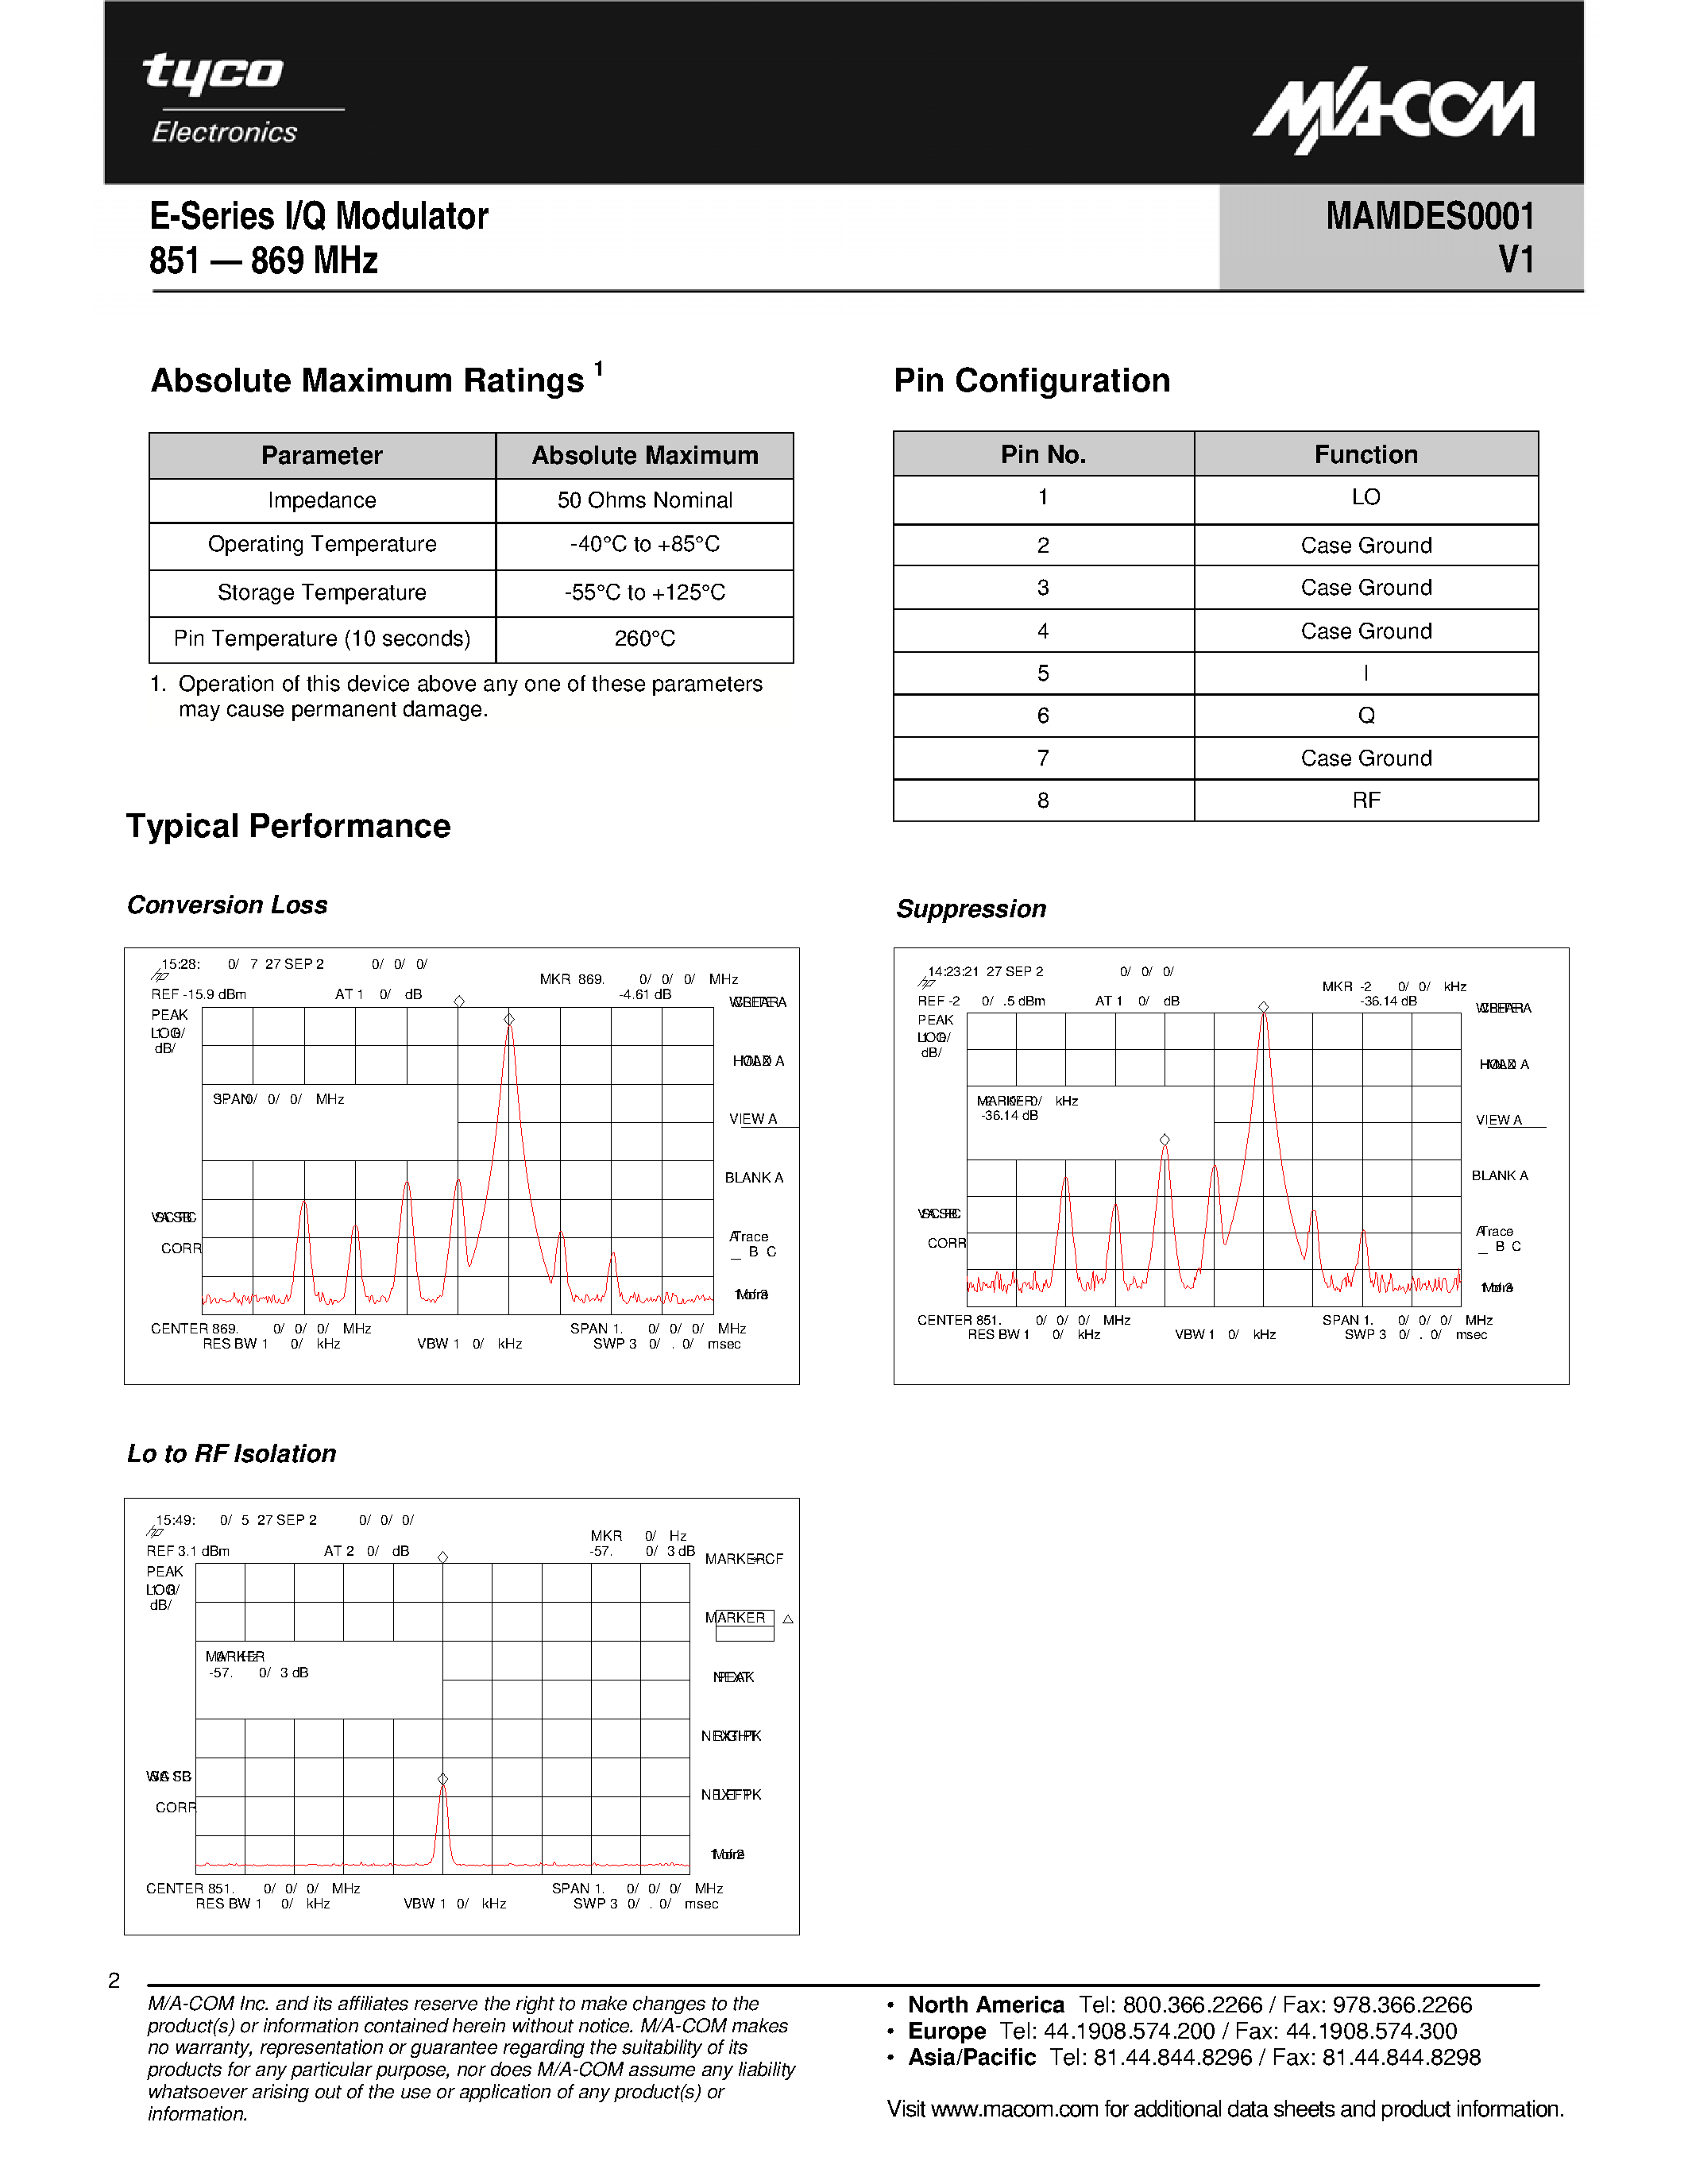 Datasheet MAMDES0001 - E-Series I/Q Modulator page 2